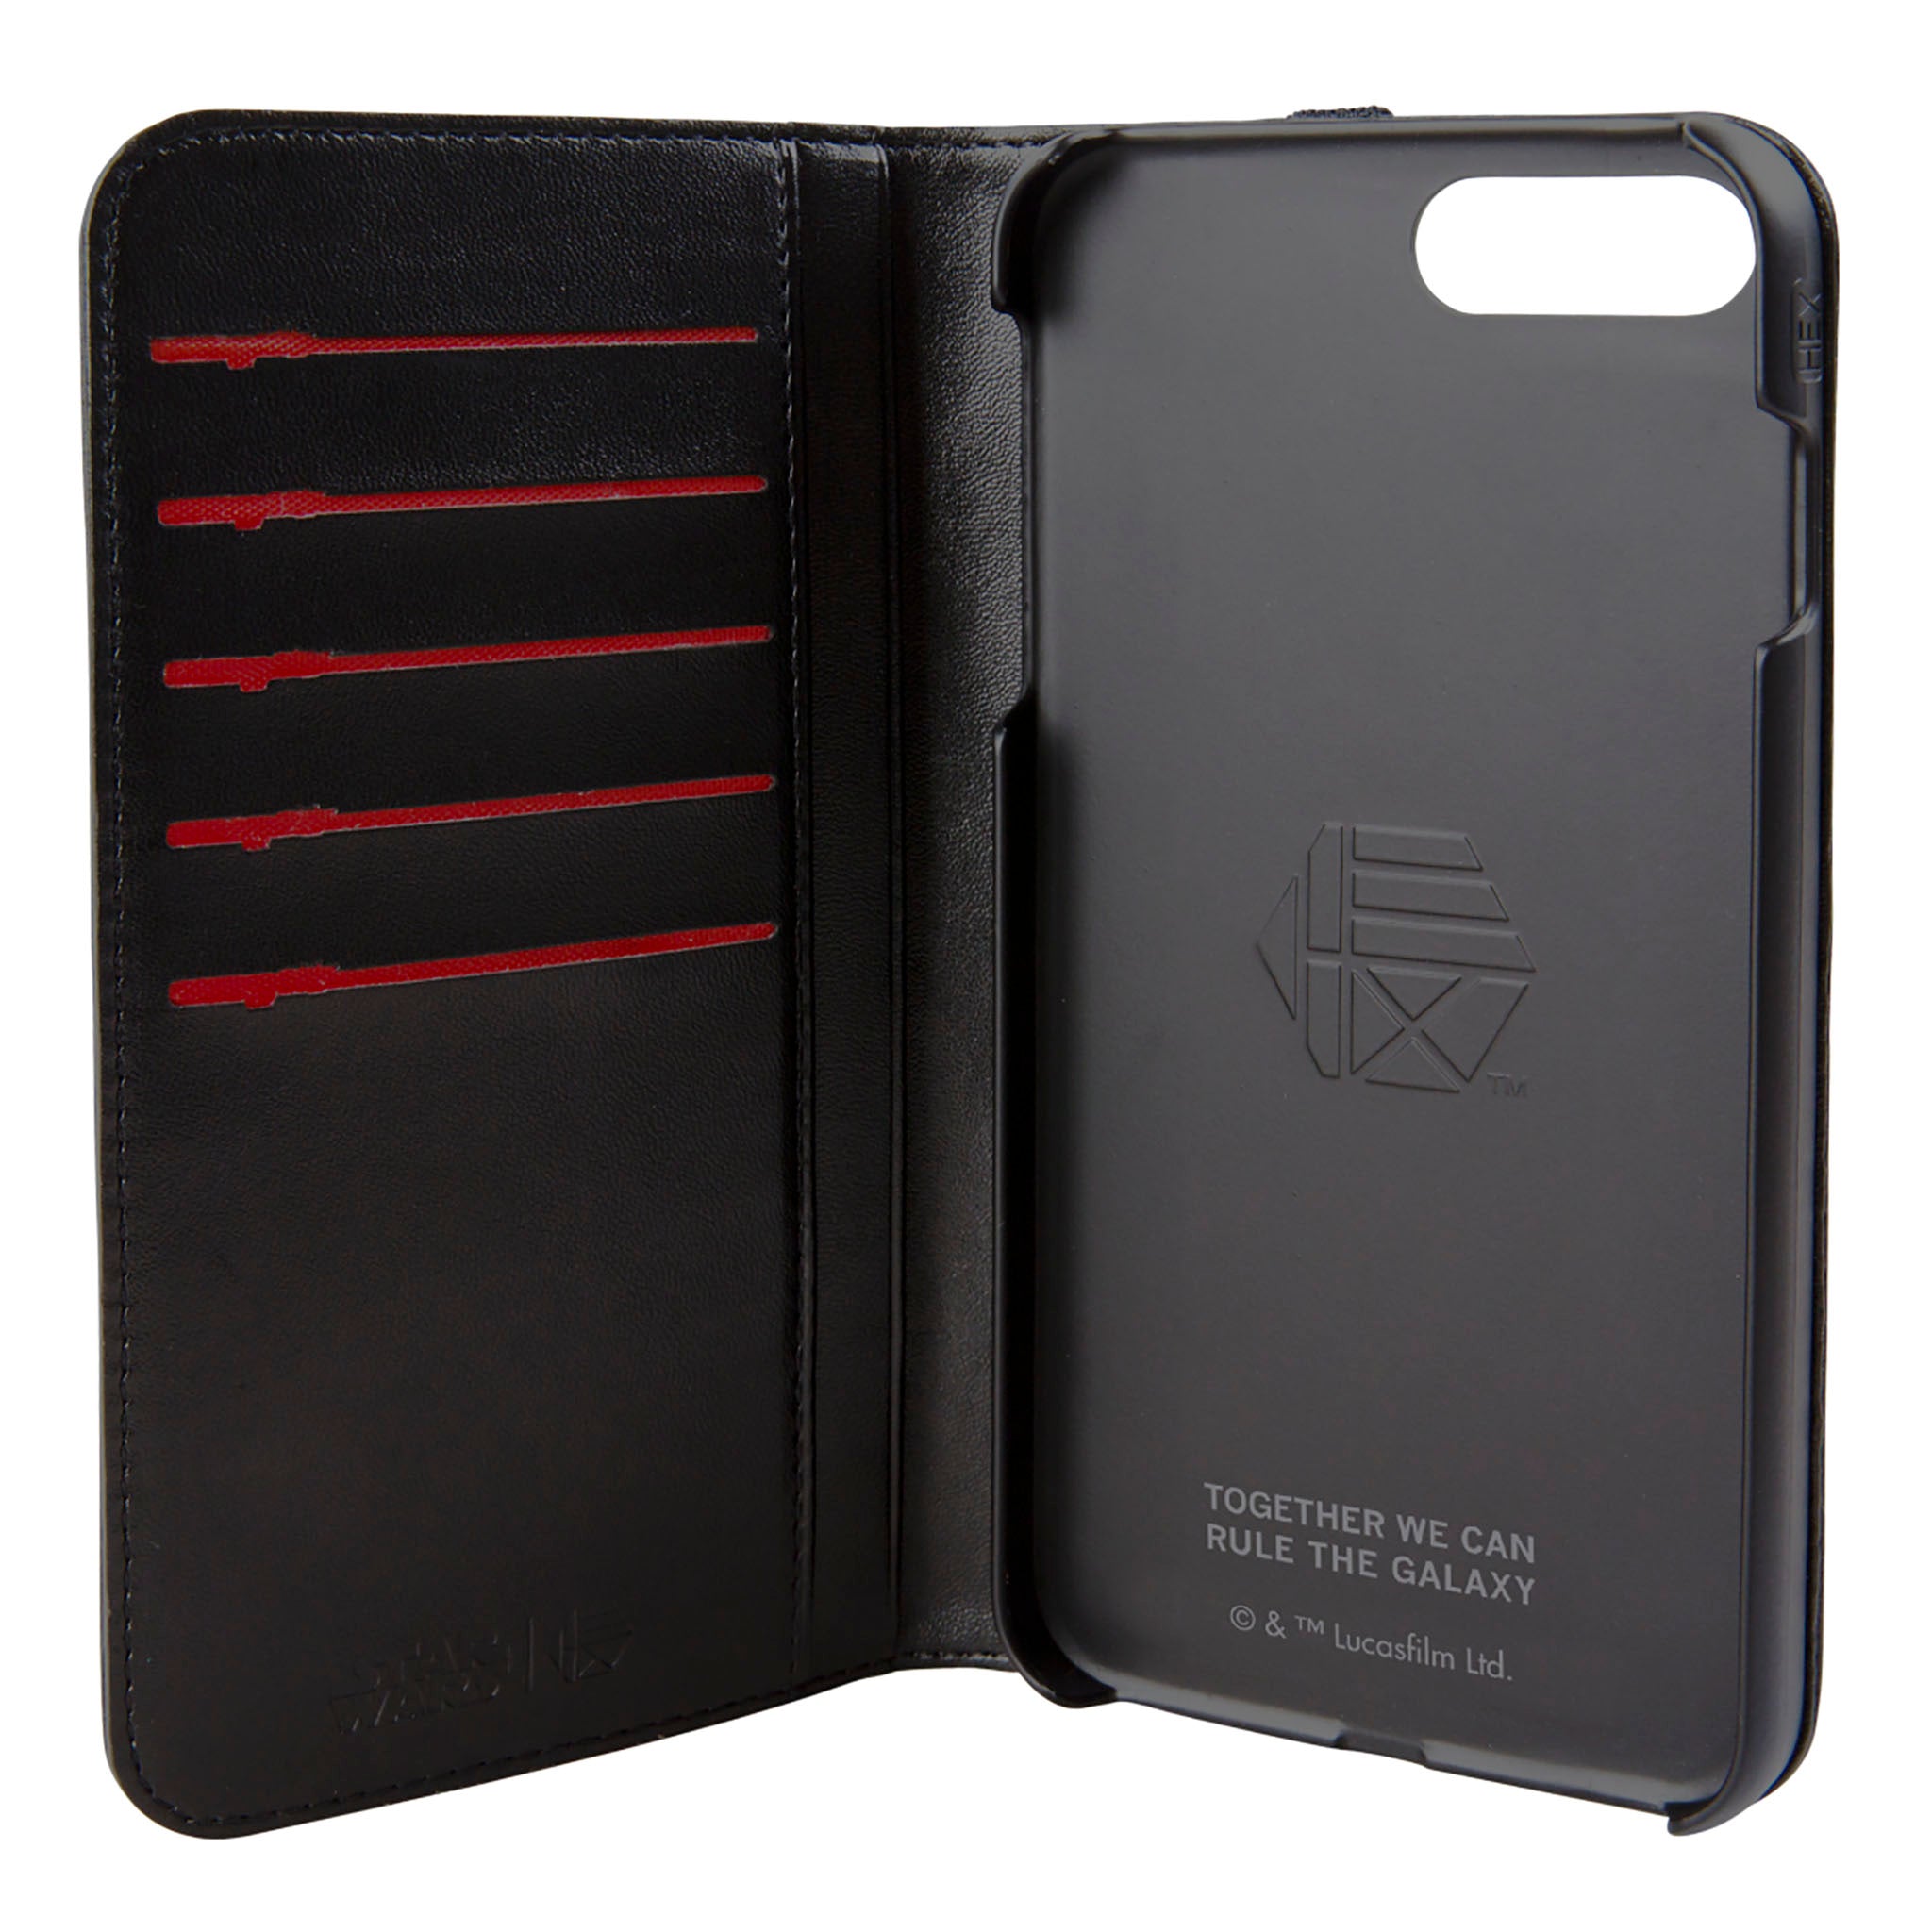 Star Wars Darth Vader Wallet Case For Iphone 8 Plus Hex